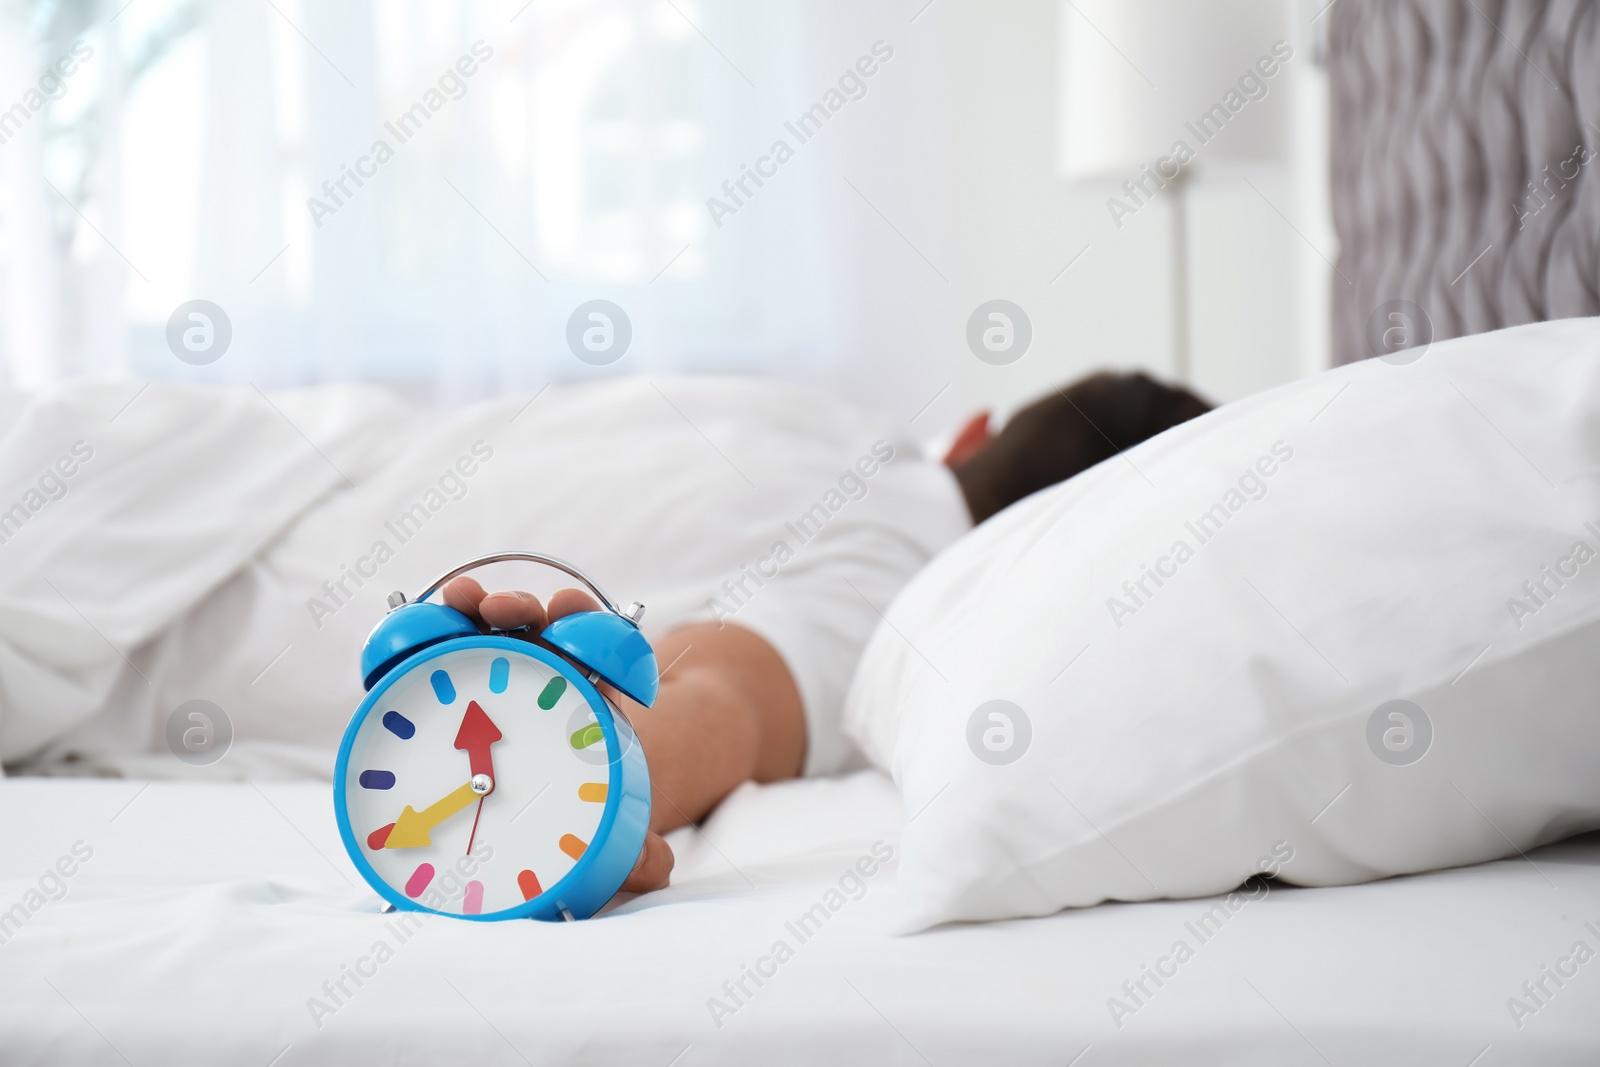 Photo of Man turning off alarm clock in bedroom